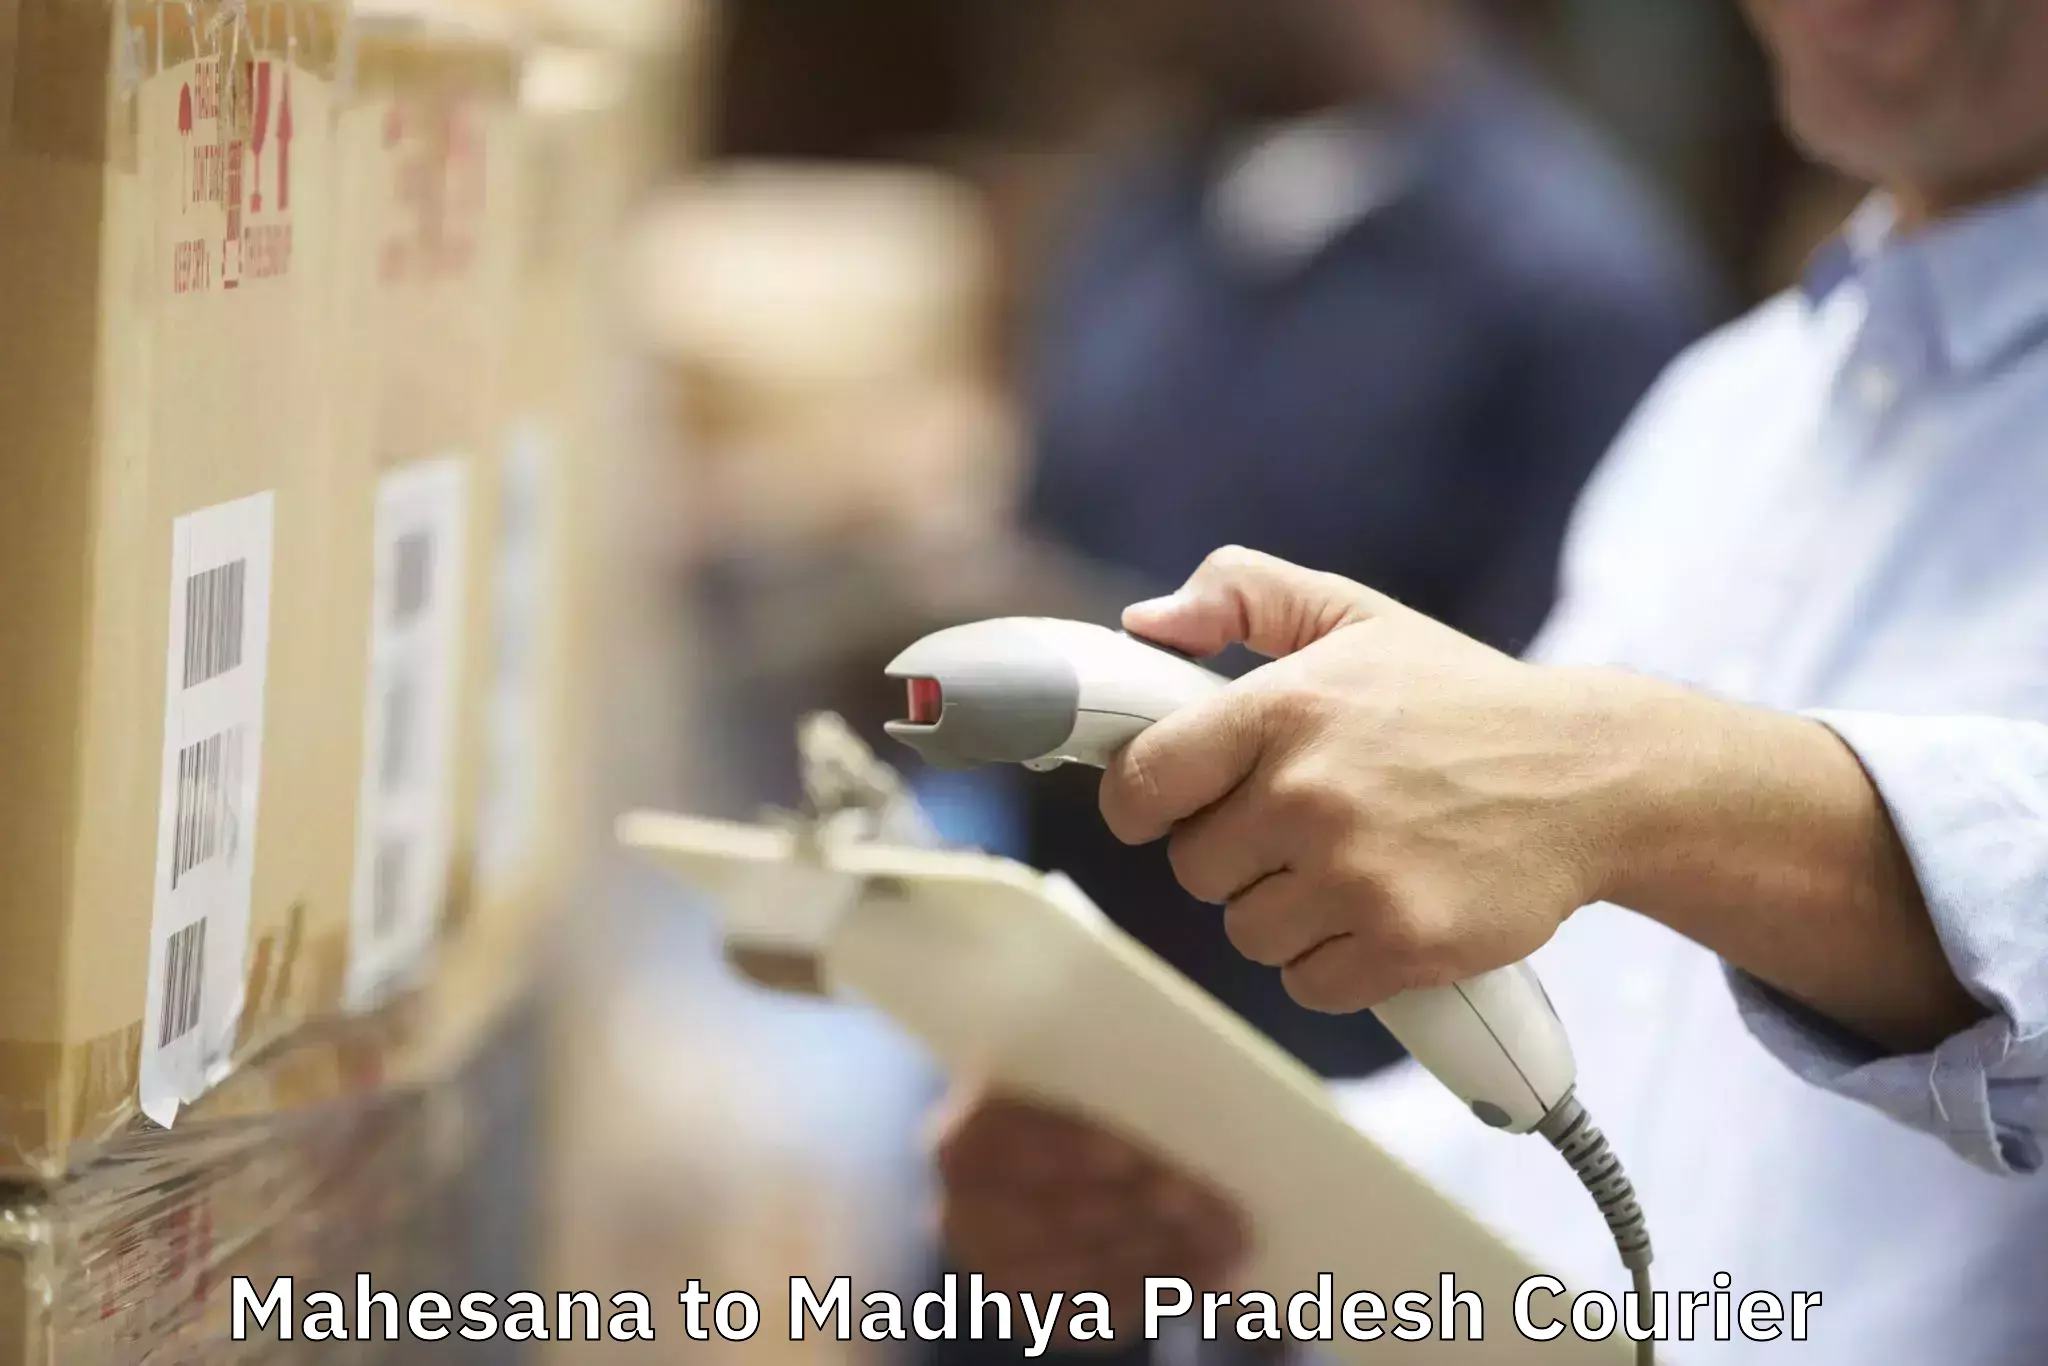 Professional moving company Mahesana to Depalpur